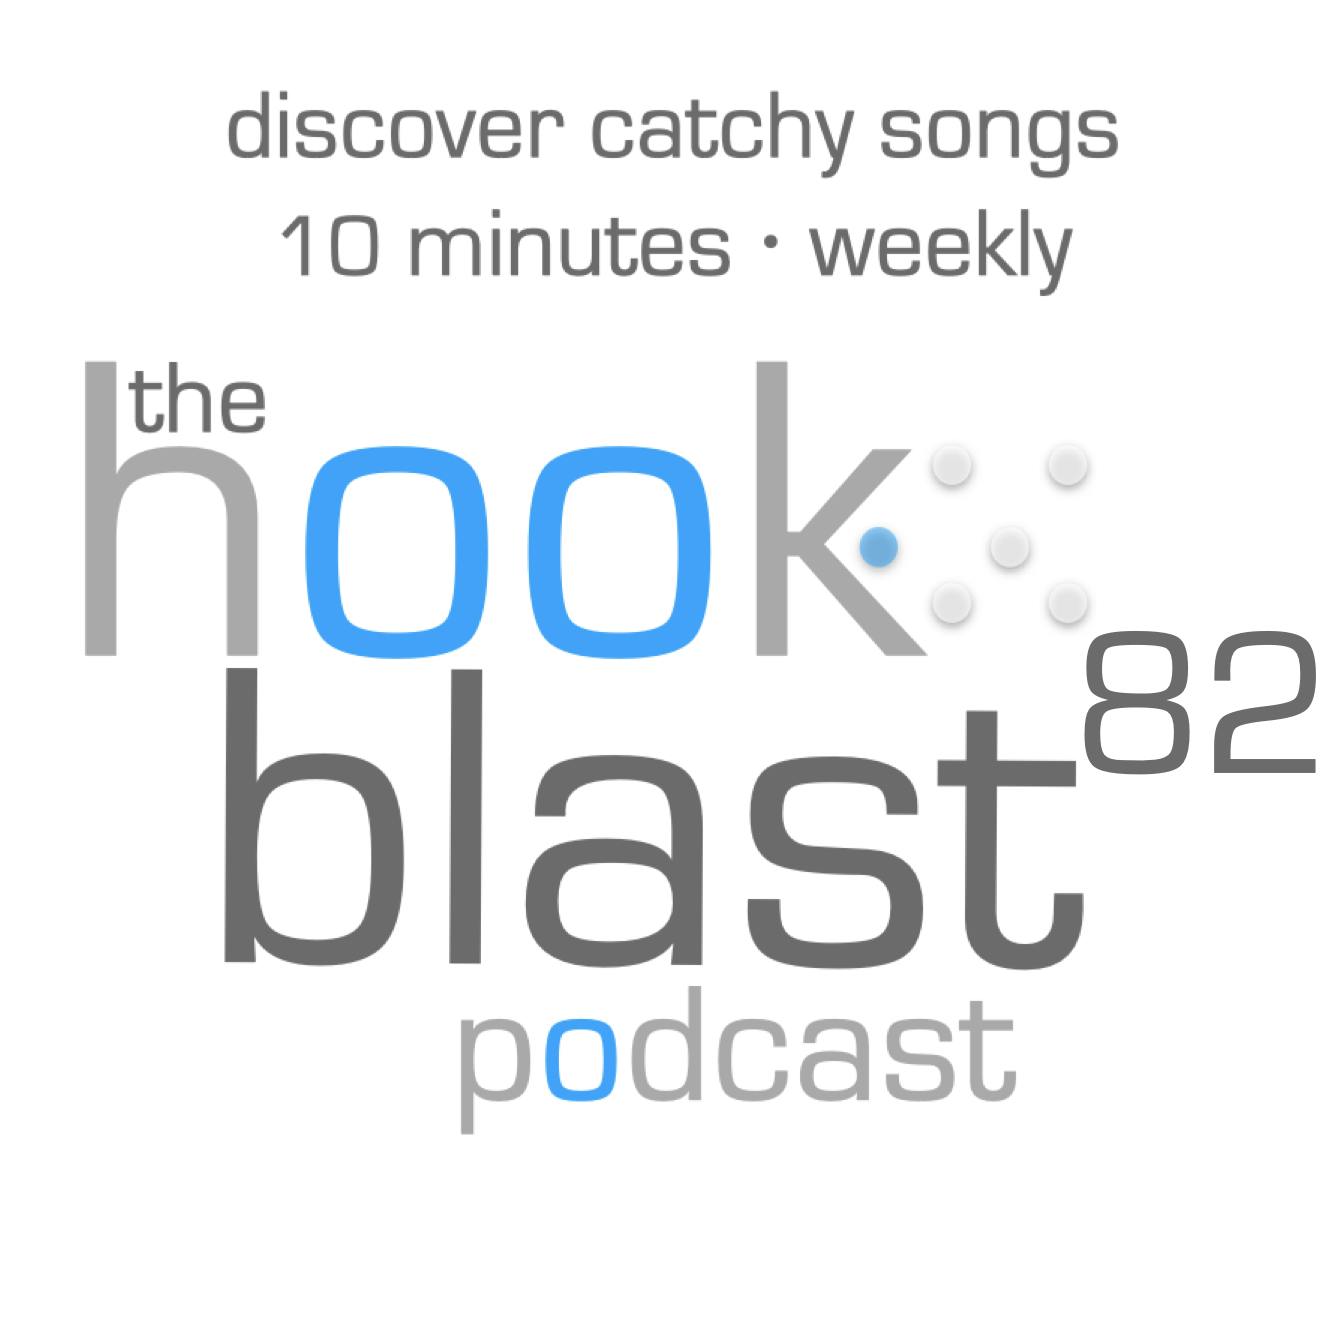 The Hookblast Podcast - Episode 82